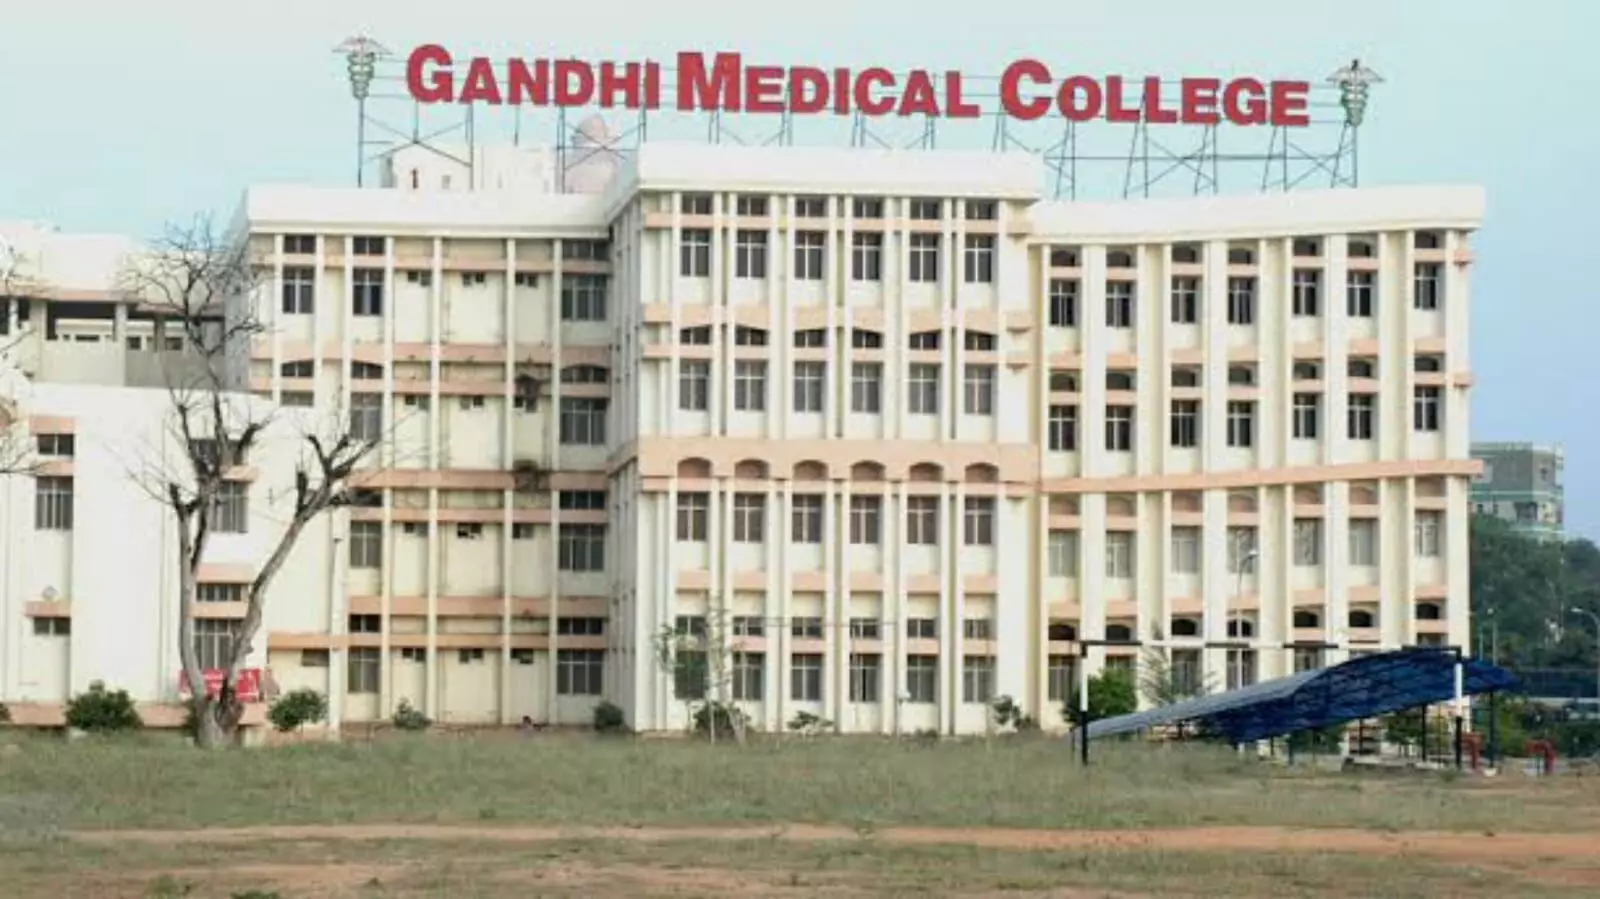 10 medicos suspended from Gandhi Medical College for ragging of juniors